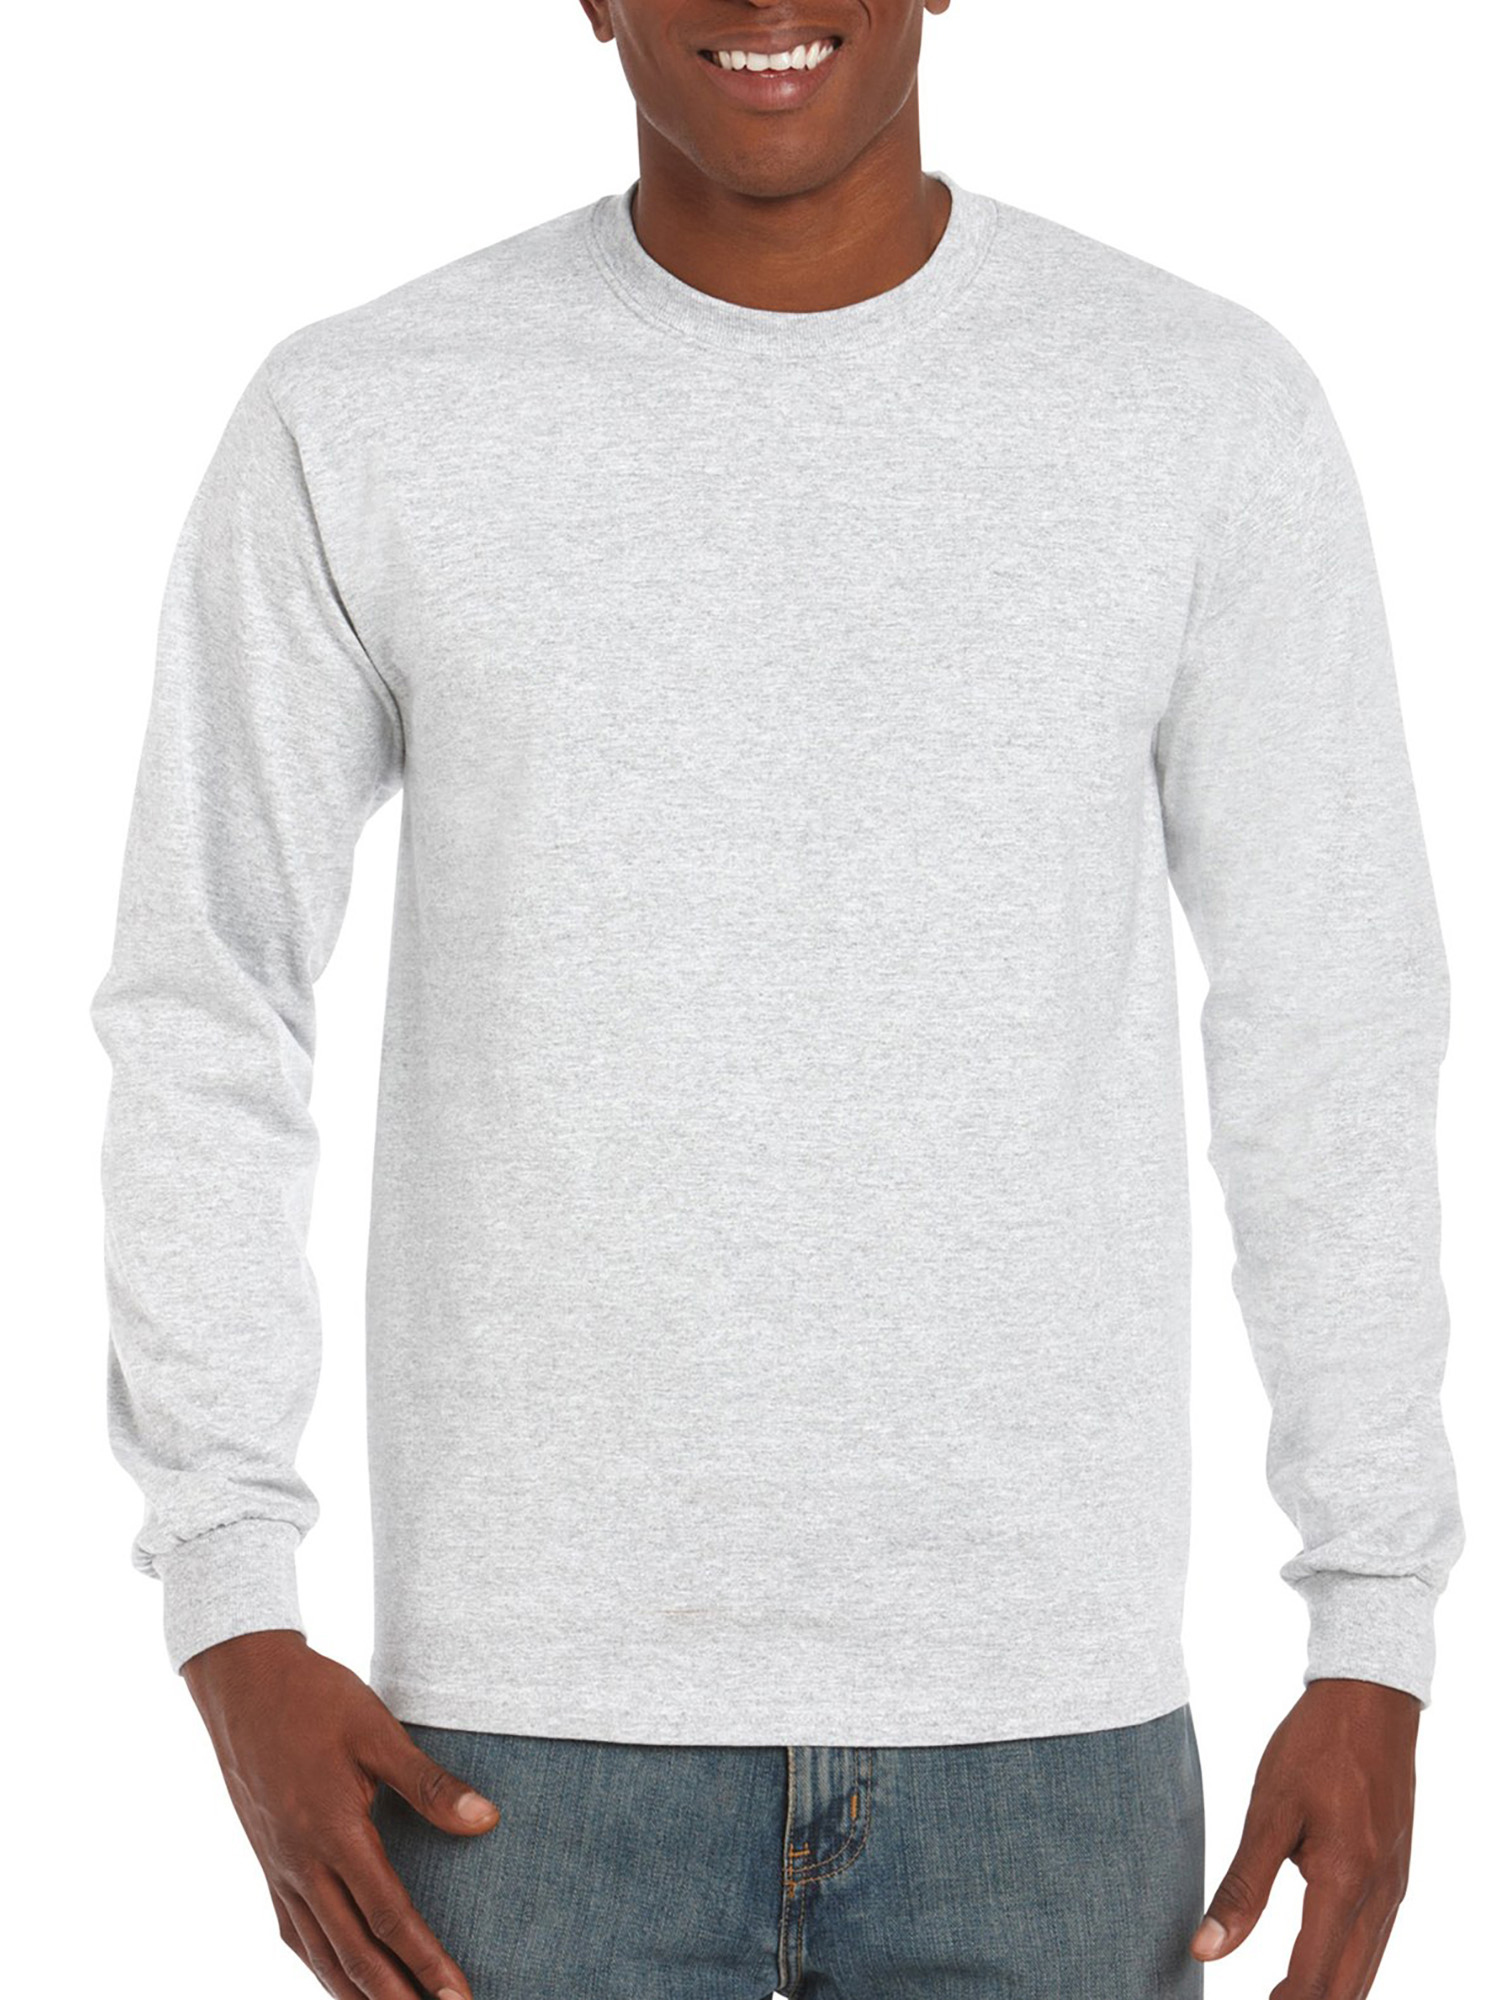 Gildan Mens Ultra Cotton Classic Long Sleeve T-Shirt - image 1 of 2